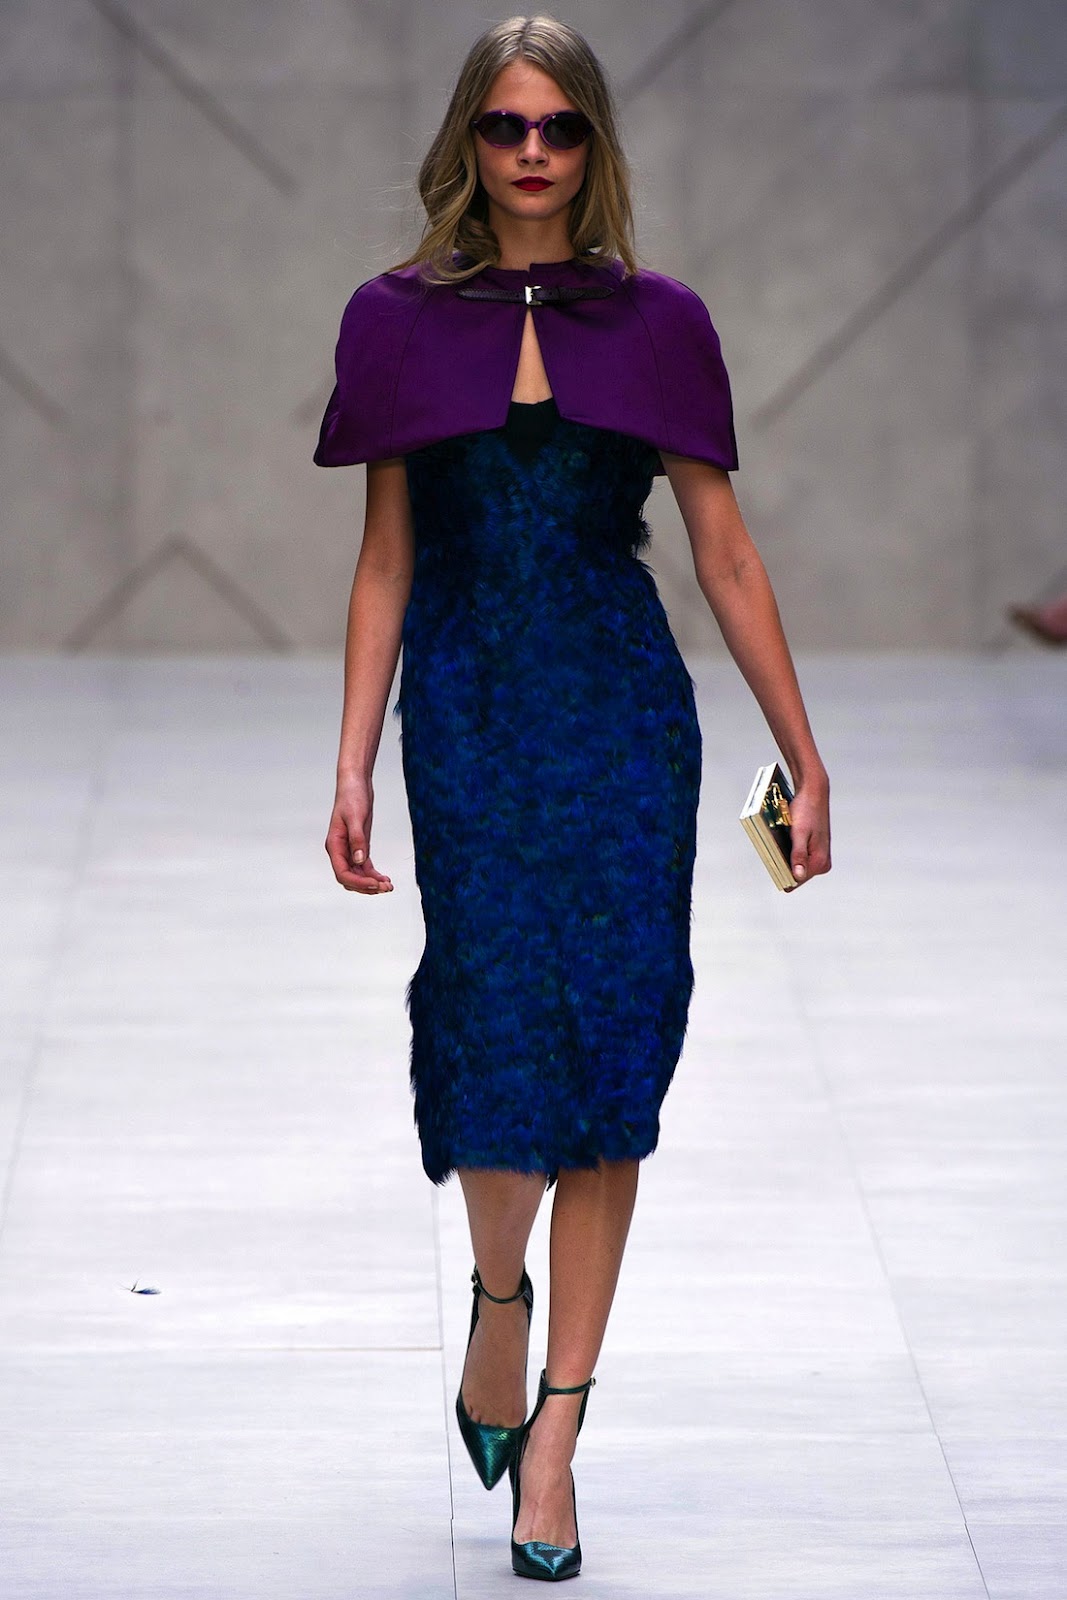 burberry prorsum s/s 13 london | visual optimism; fashion editorials ...